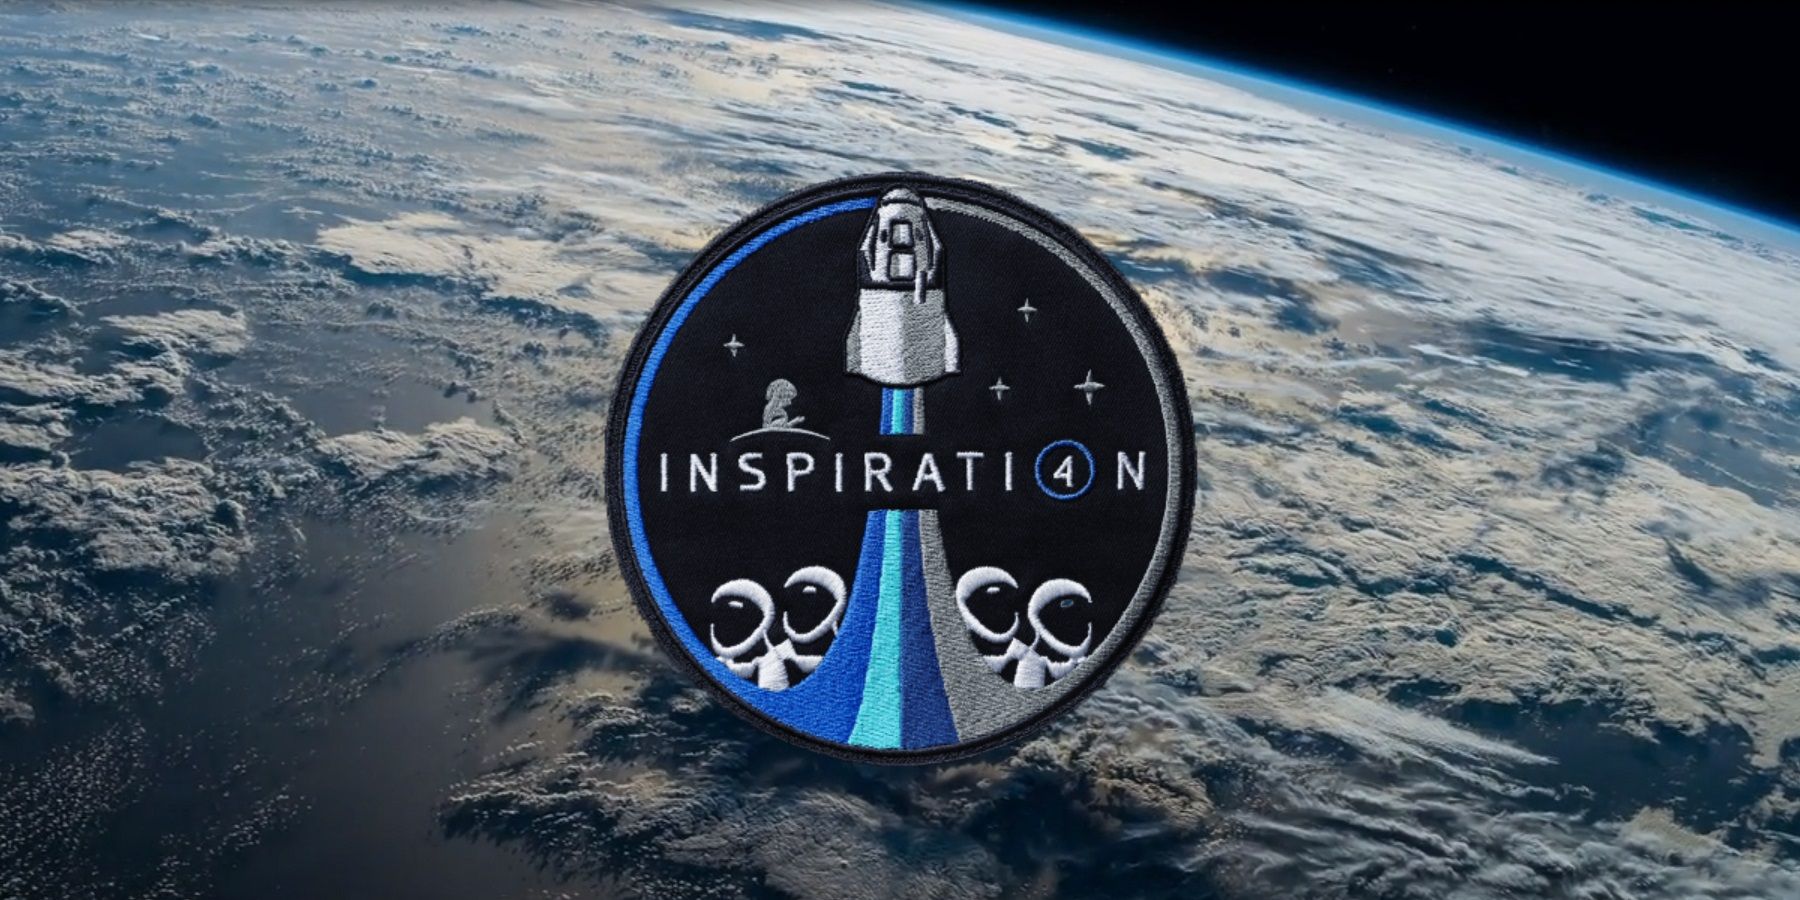 SpaceX Inspiration 4 All-Civilian Crew Announced